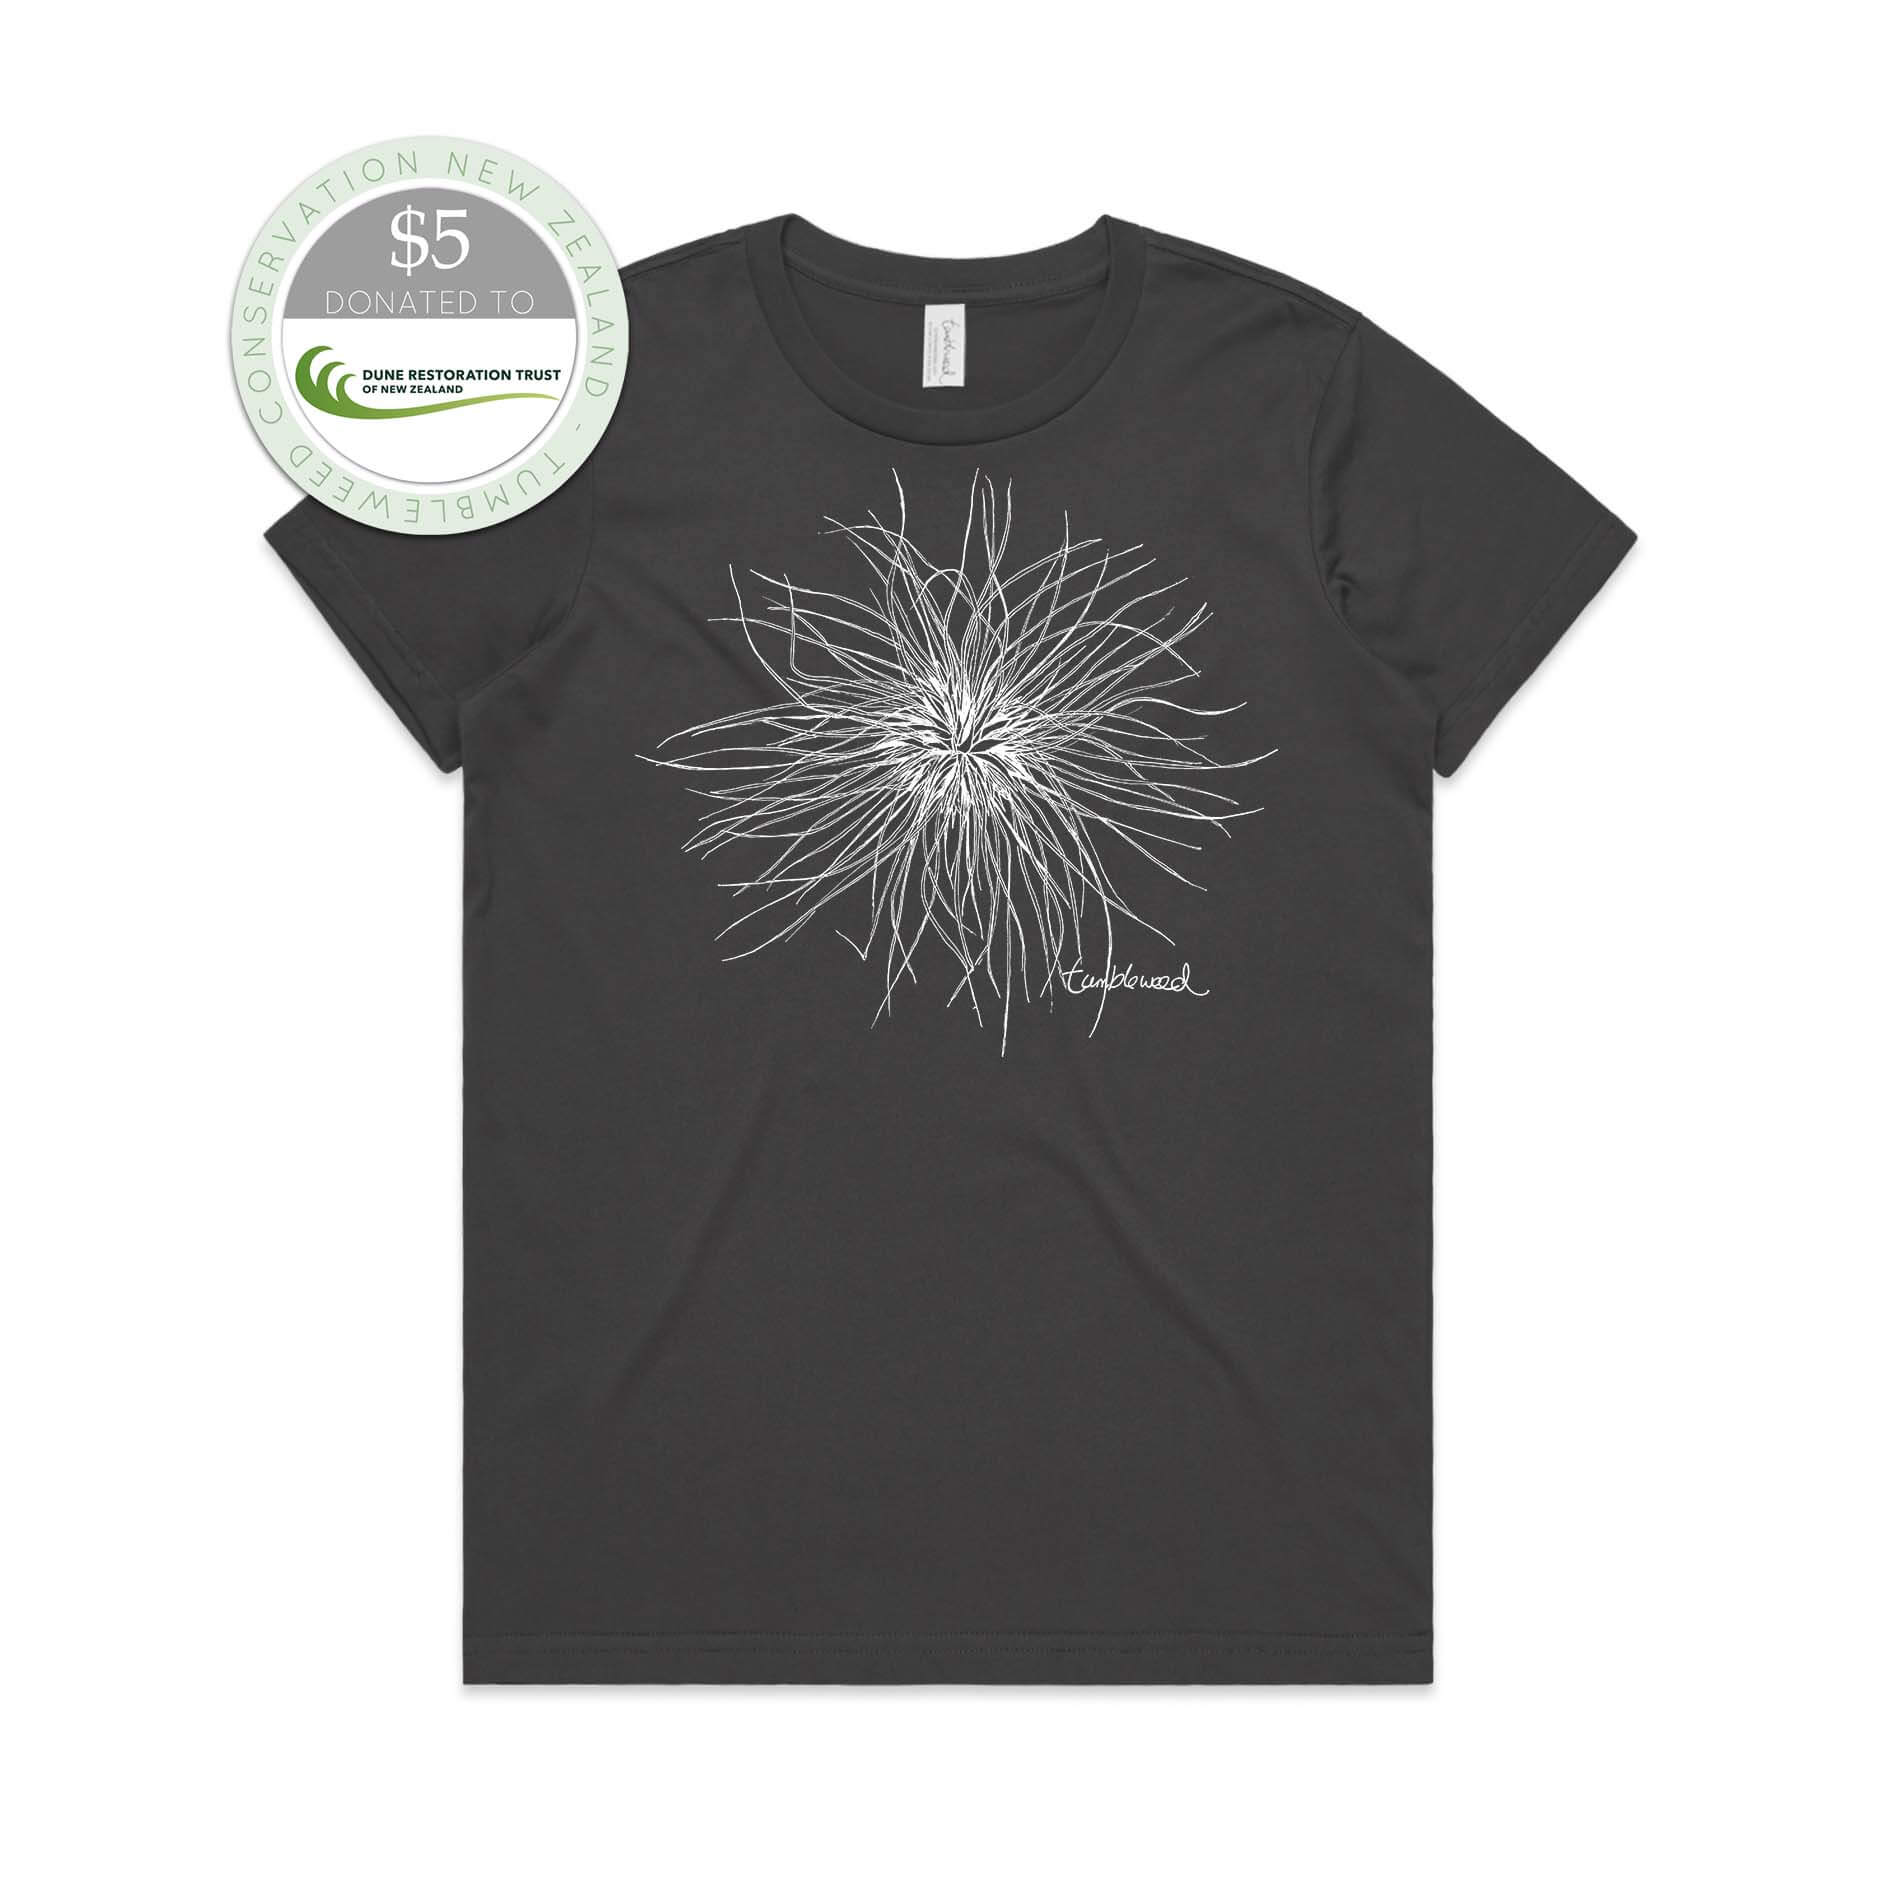 Charcoal, female t-shirt featuring a screen printed Tumbleweed design.